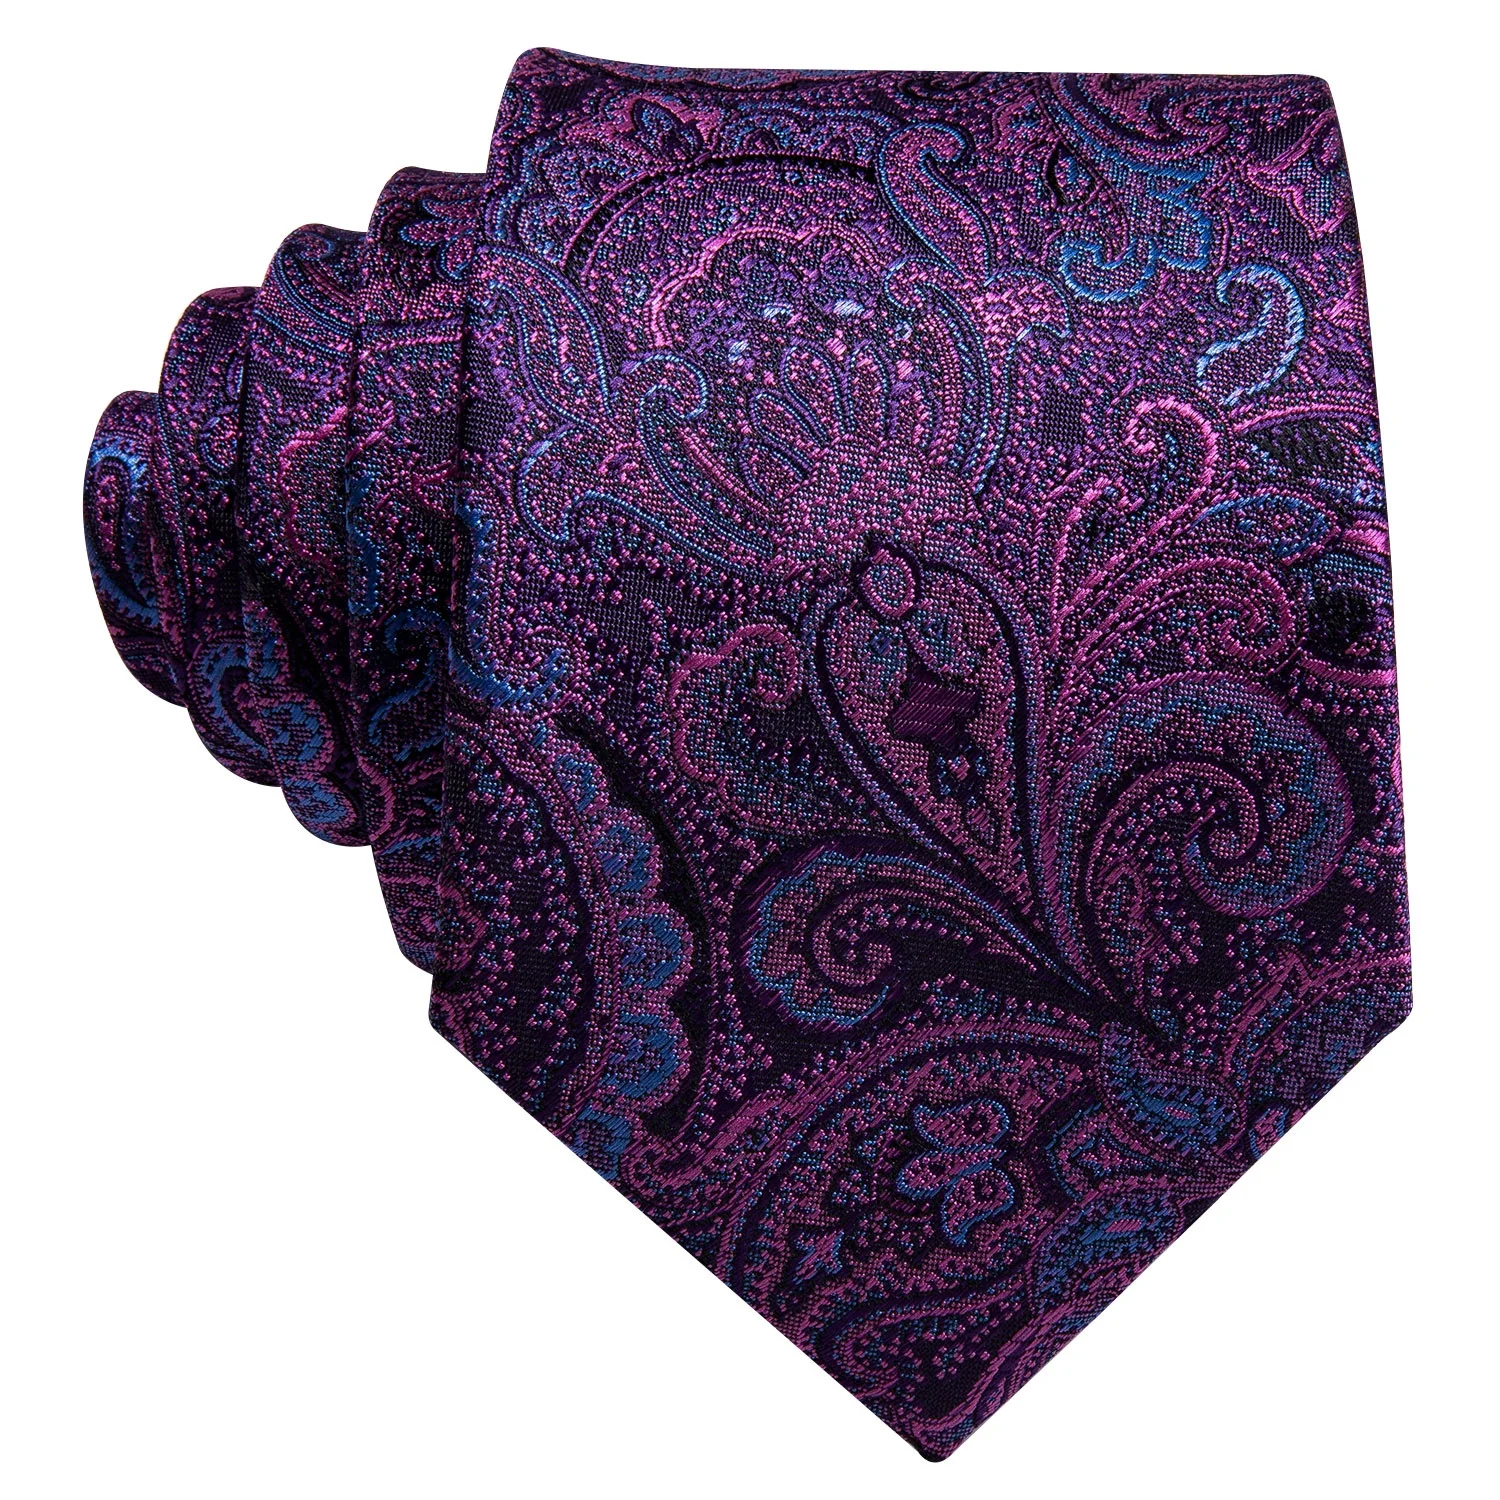 
Italian Tie Men High Quality Purple Paisley Silk Necktie 